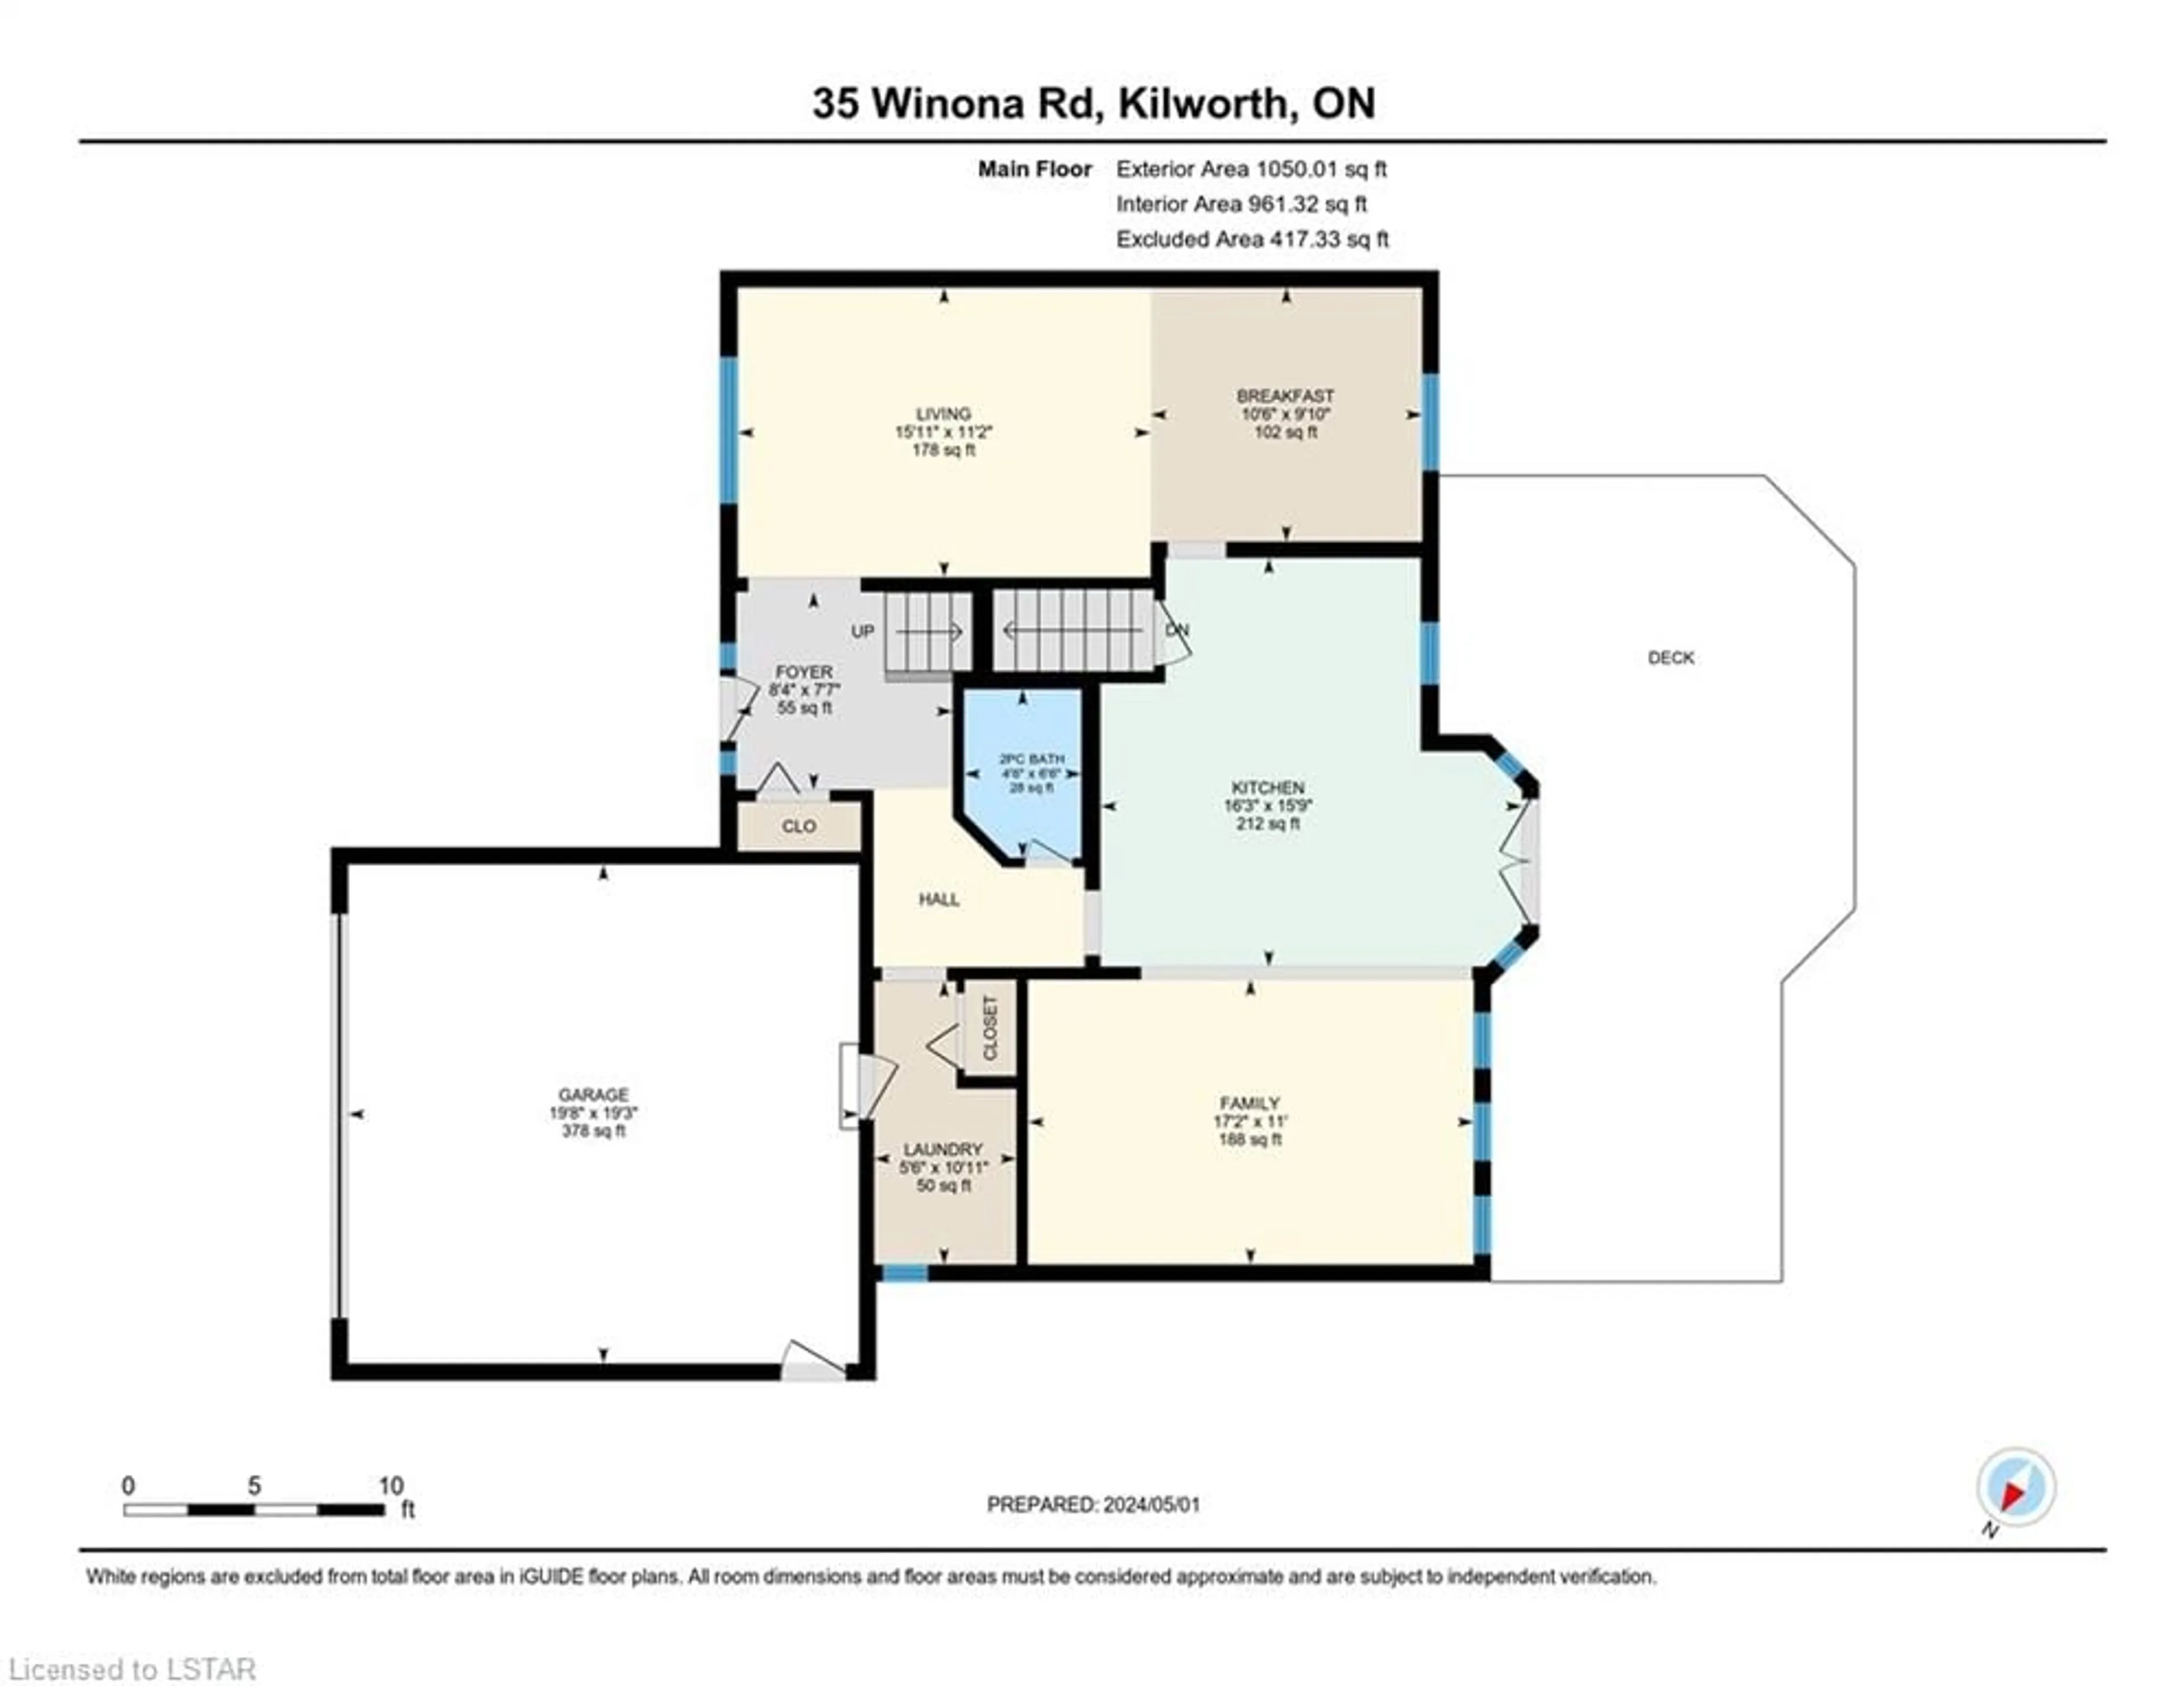 Floor plan for 35 Winona Rd, Kilworth Ontario N0L 1R0